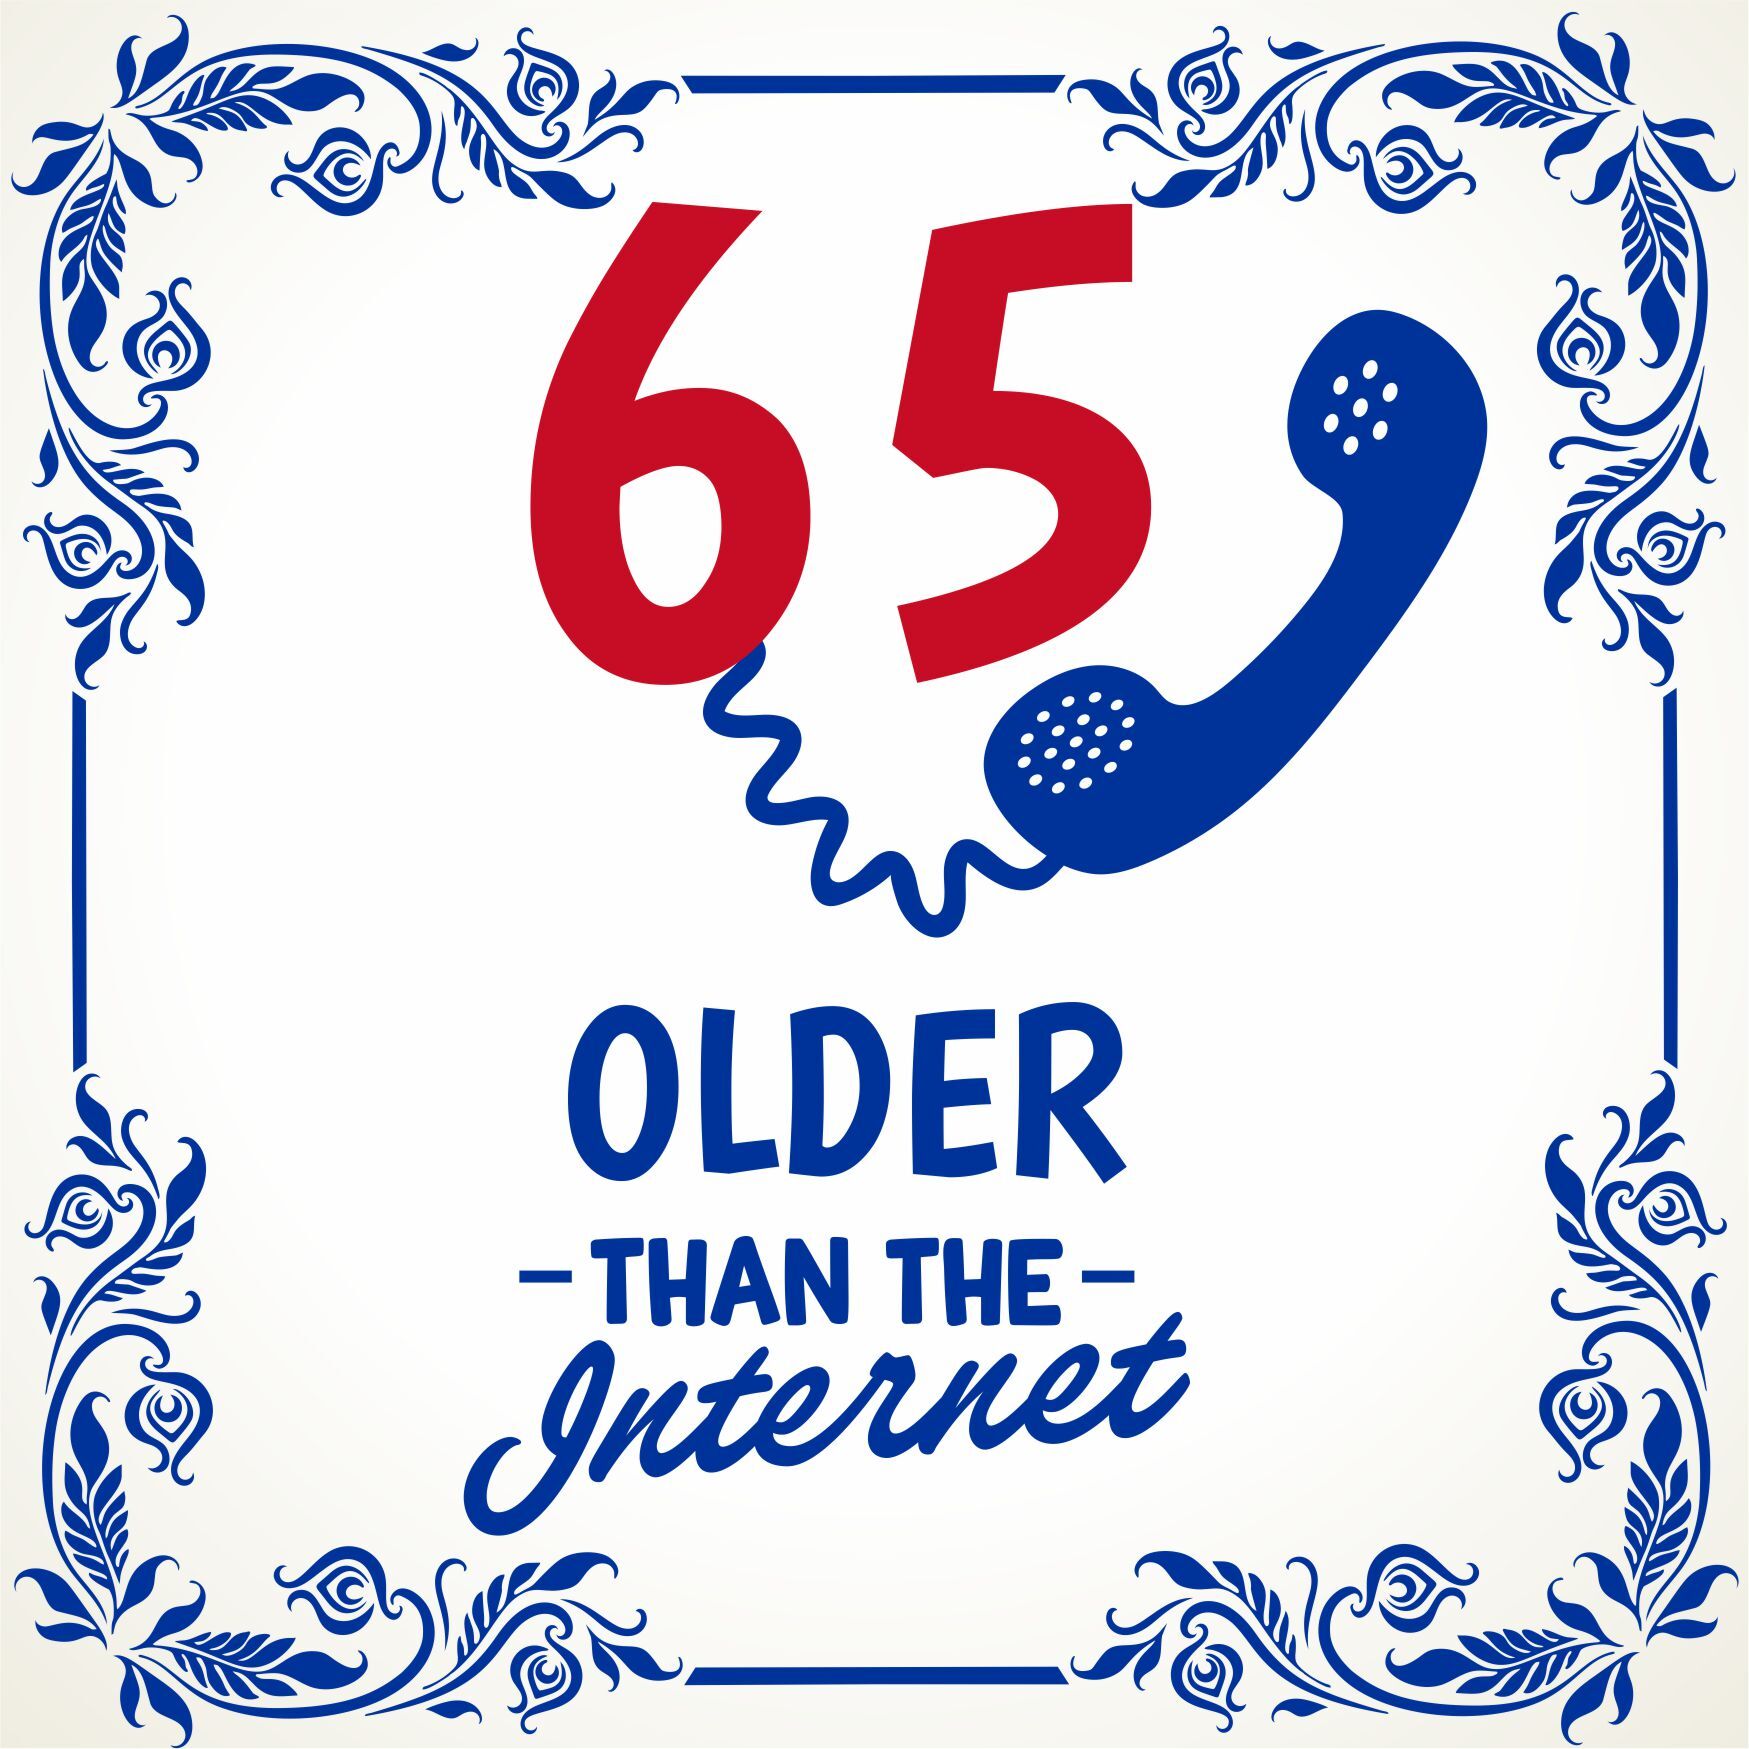 65 older than the internet tegel grappig orgineel en betaalbaar